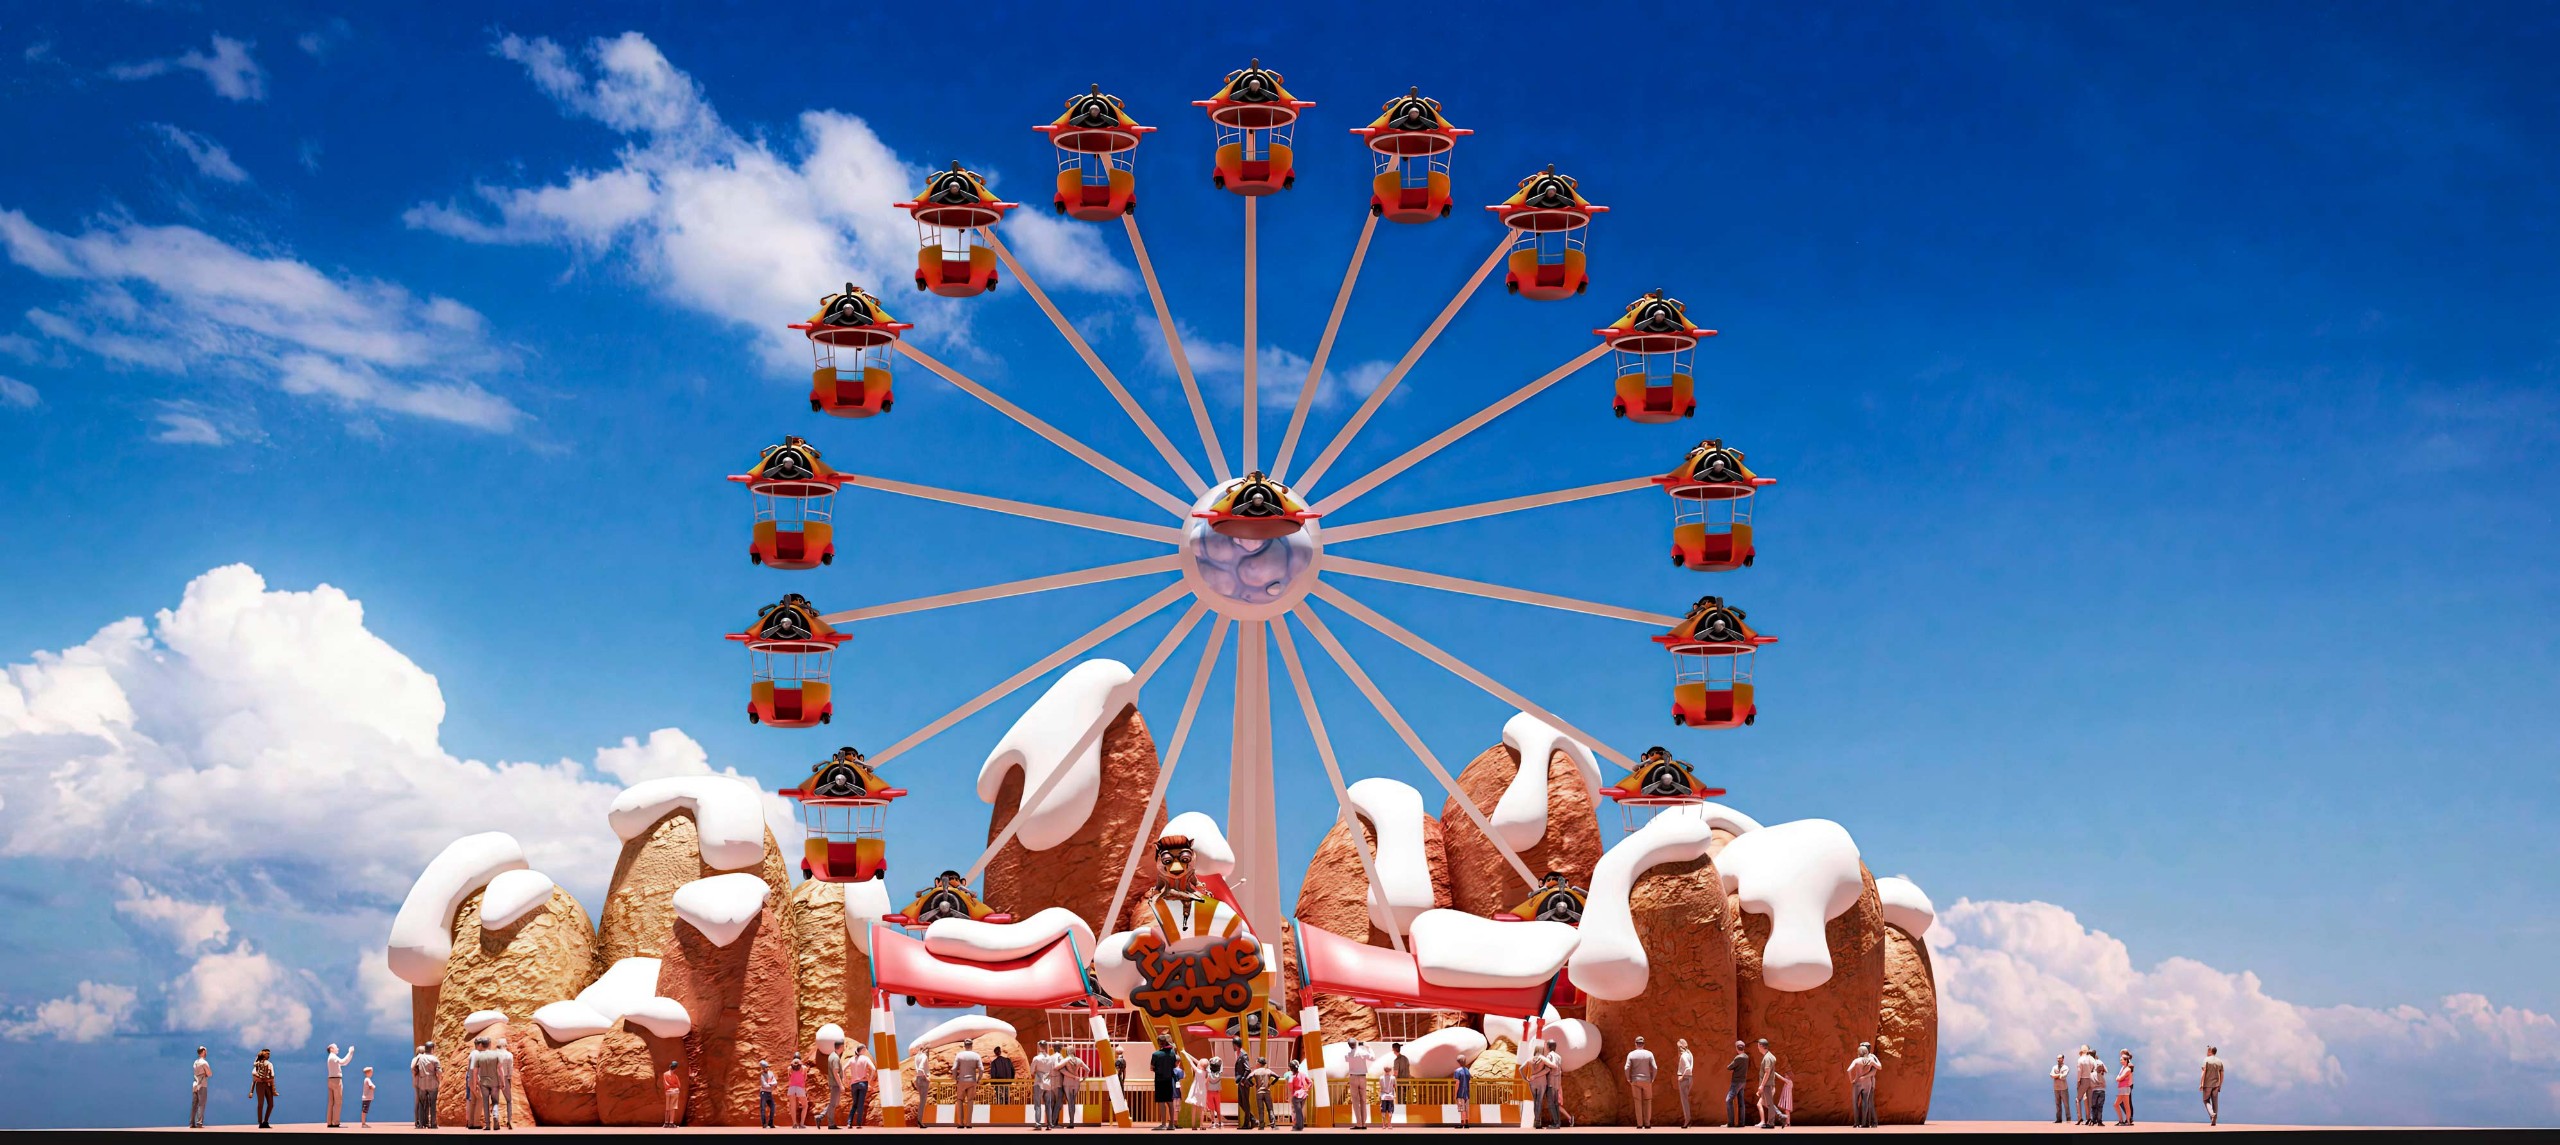 FAMILY THEME PARK FERRIS WHEELRIDE,customized amusement park attractions